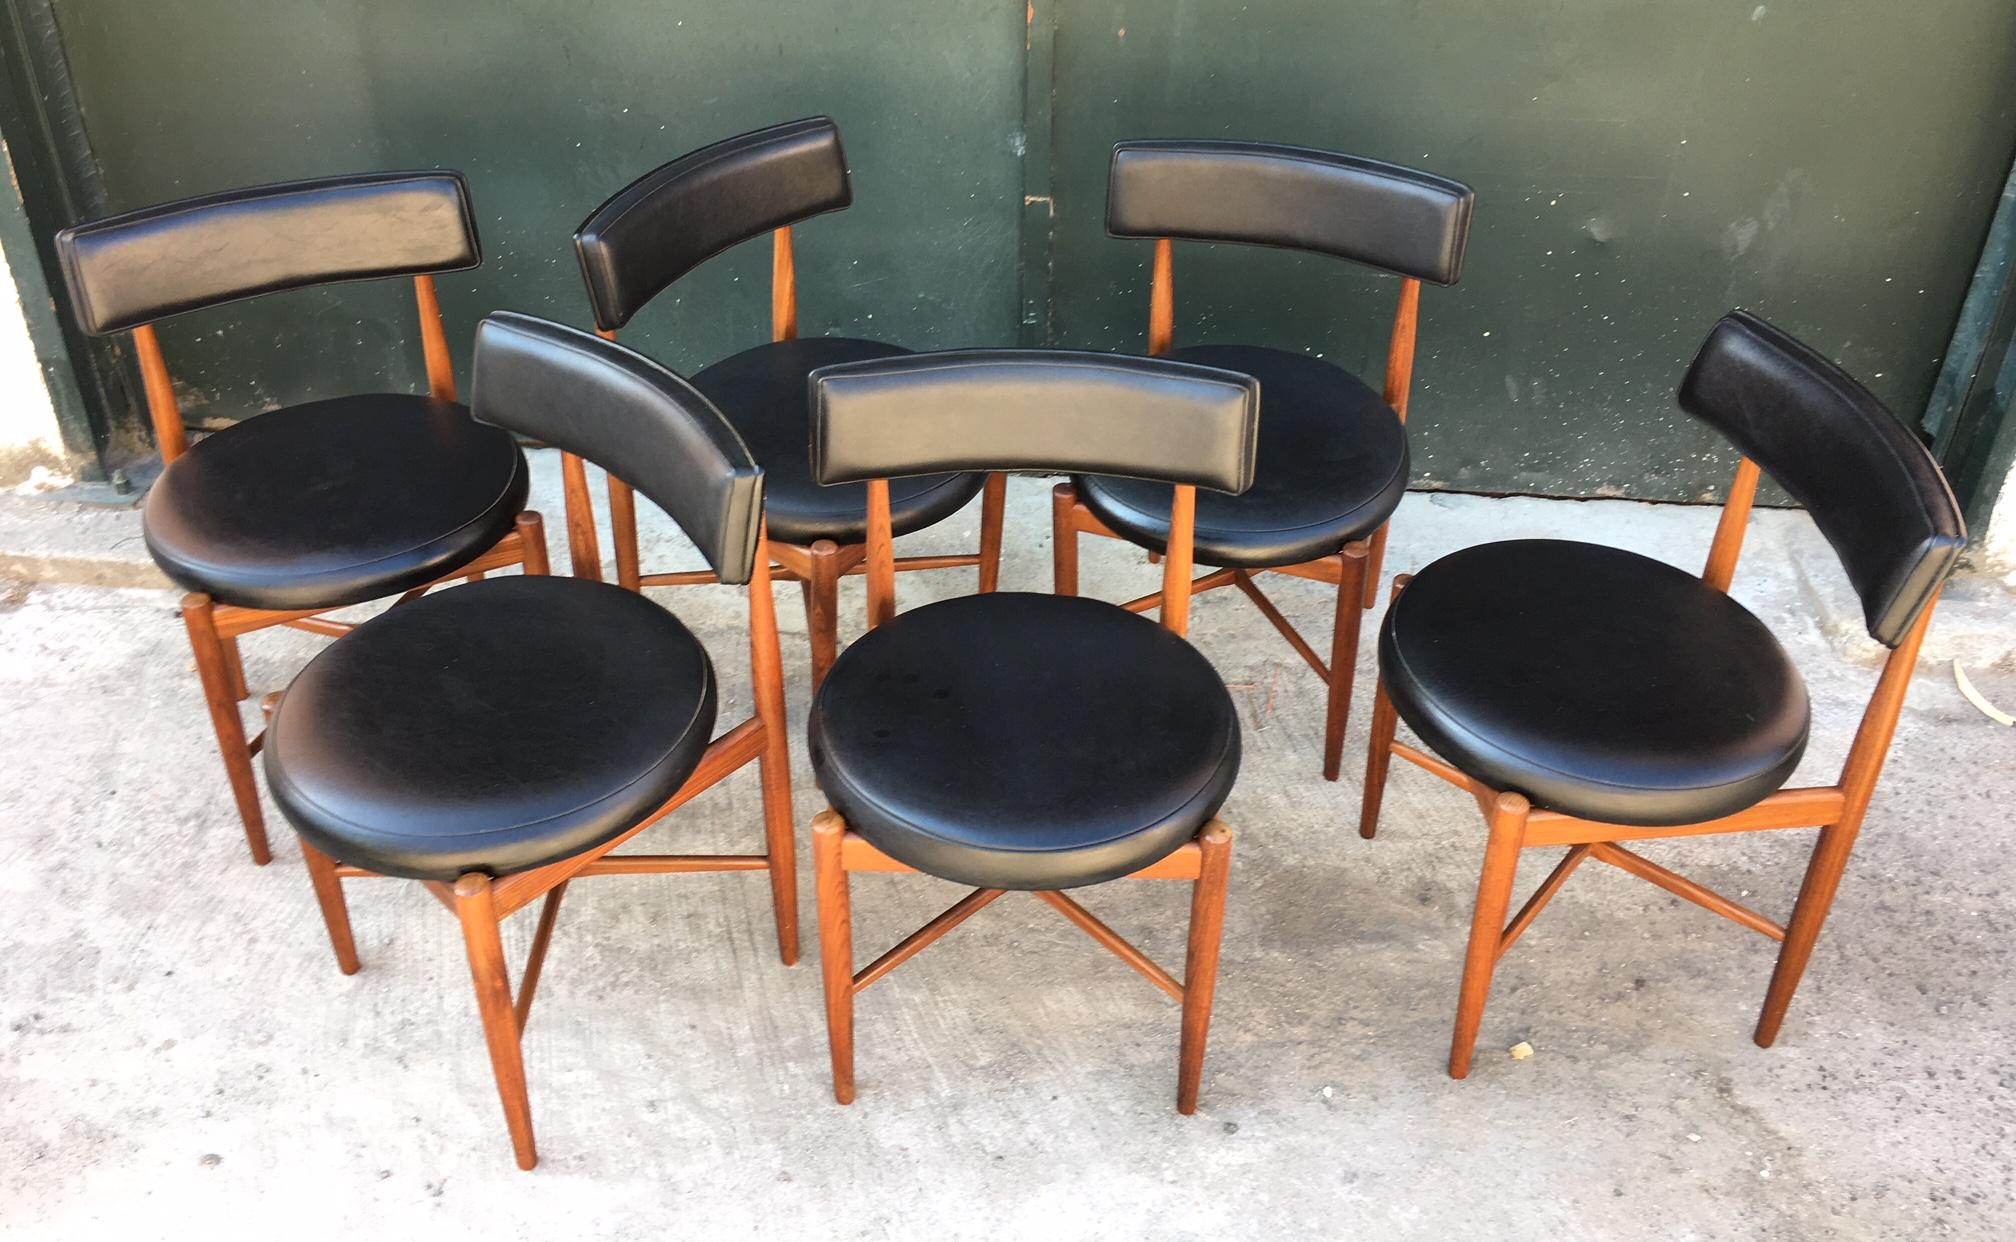 Set of six teak dining chairs (1960s) by Ib Kofod Larsen for G-Plan.